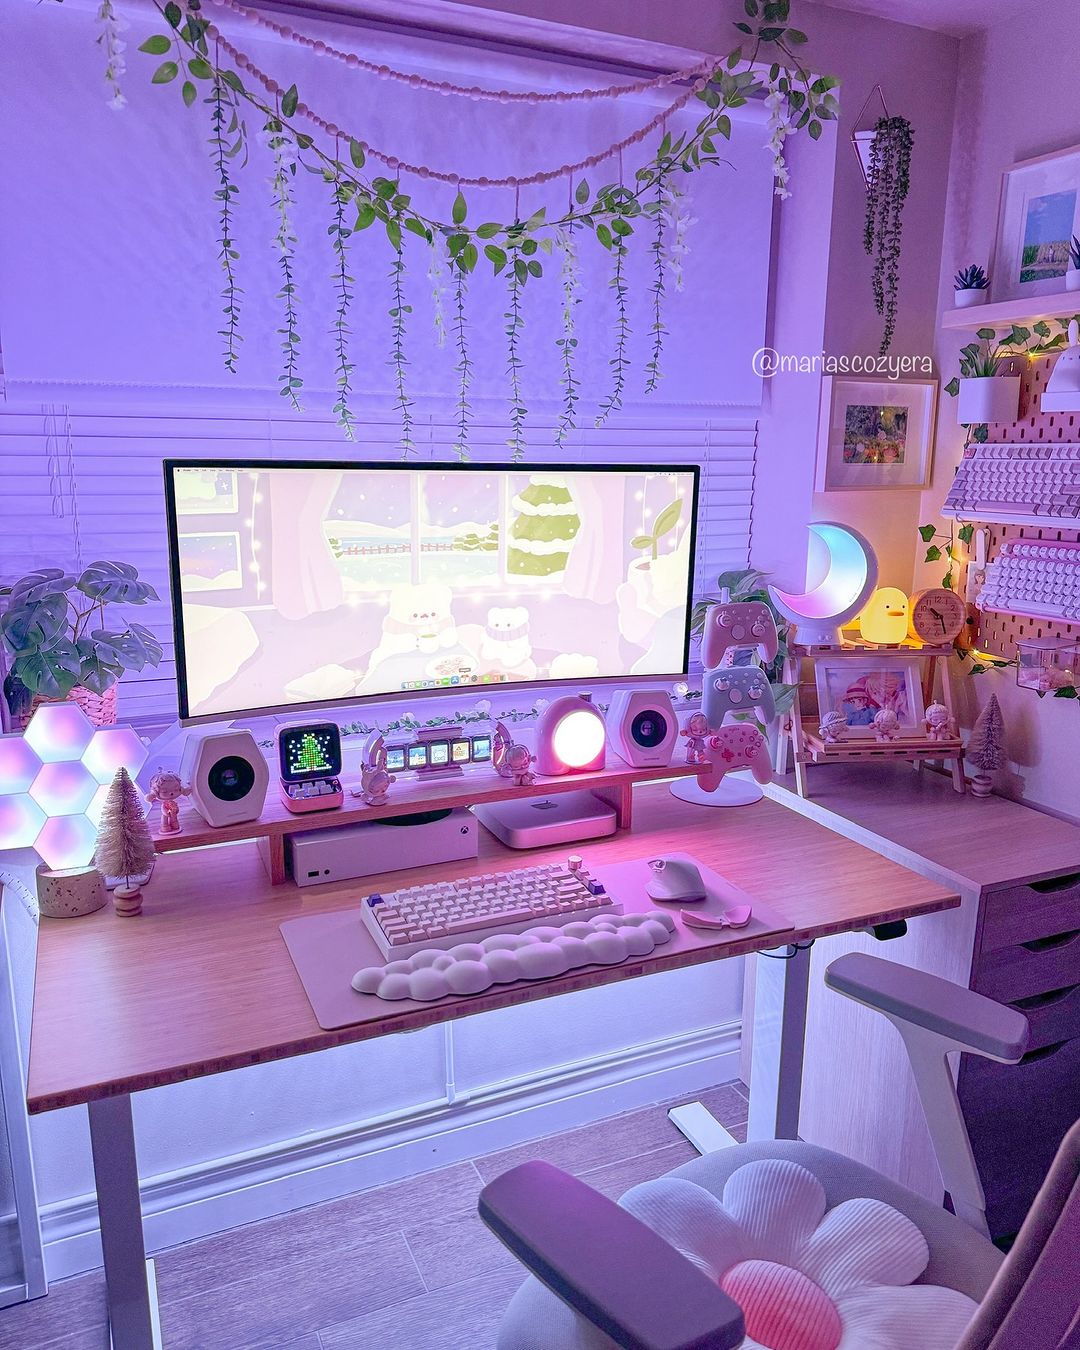 25 Beautiful Two-Monitor Desk Setup Office Ideas